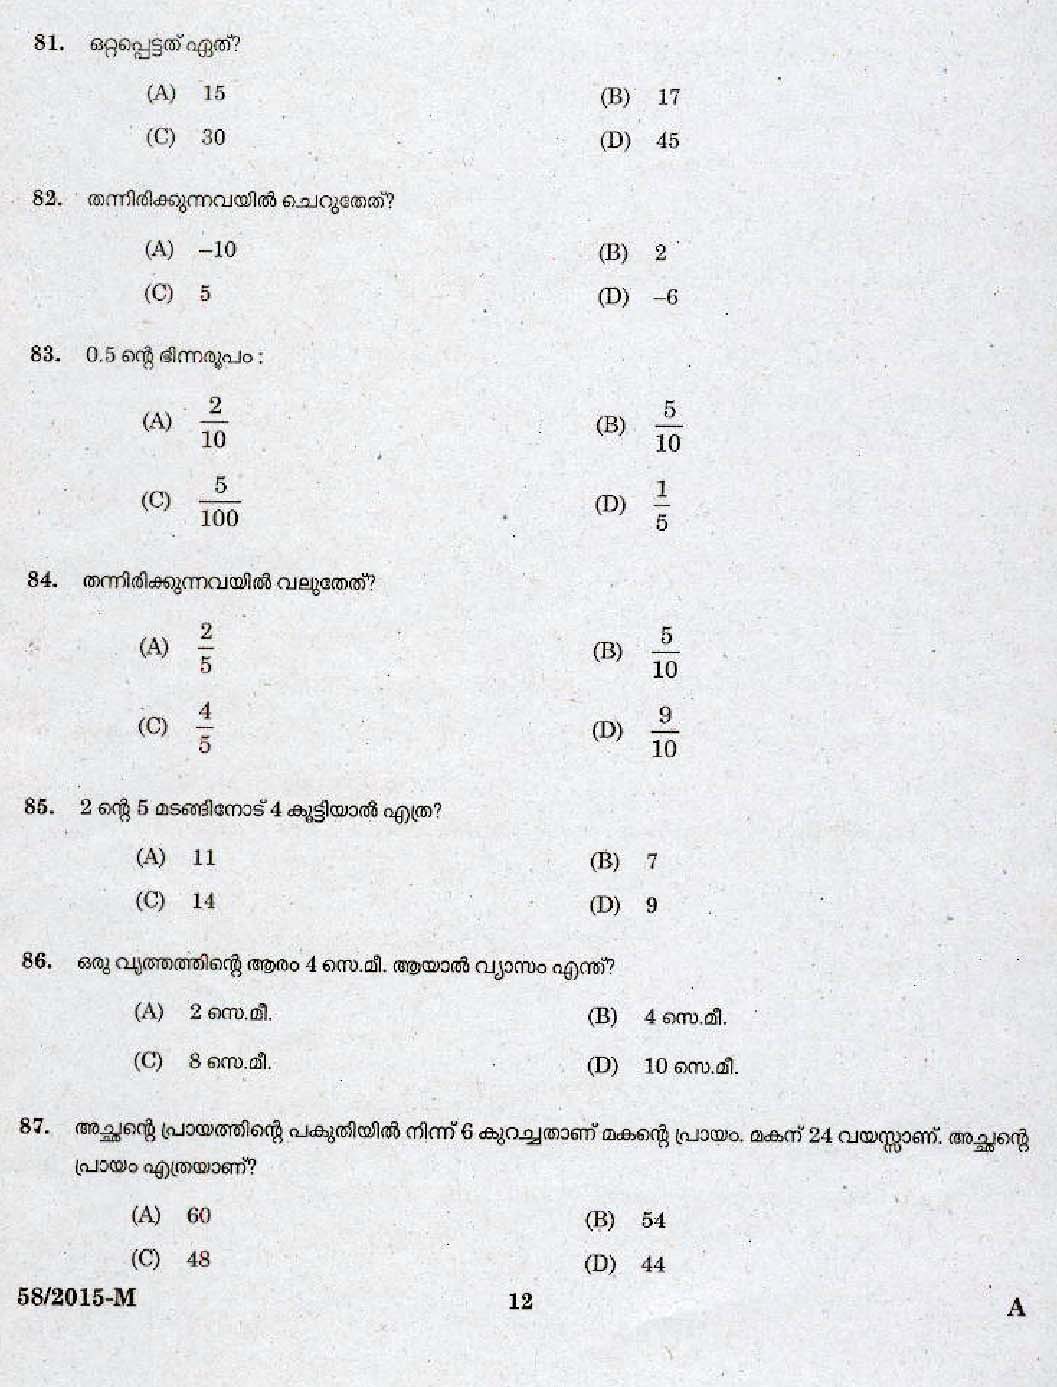 Kerala PSC Attender Exam 2015 Question Paper Code 582015 M 10